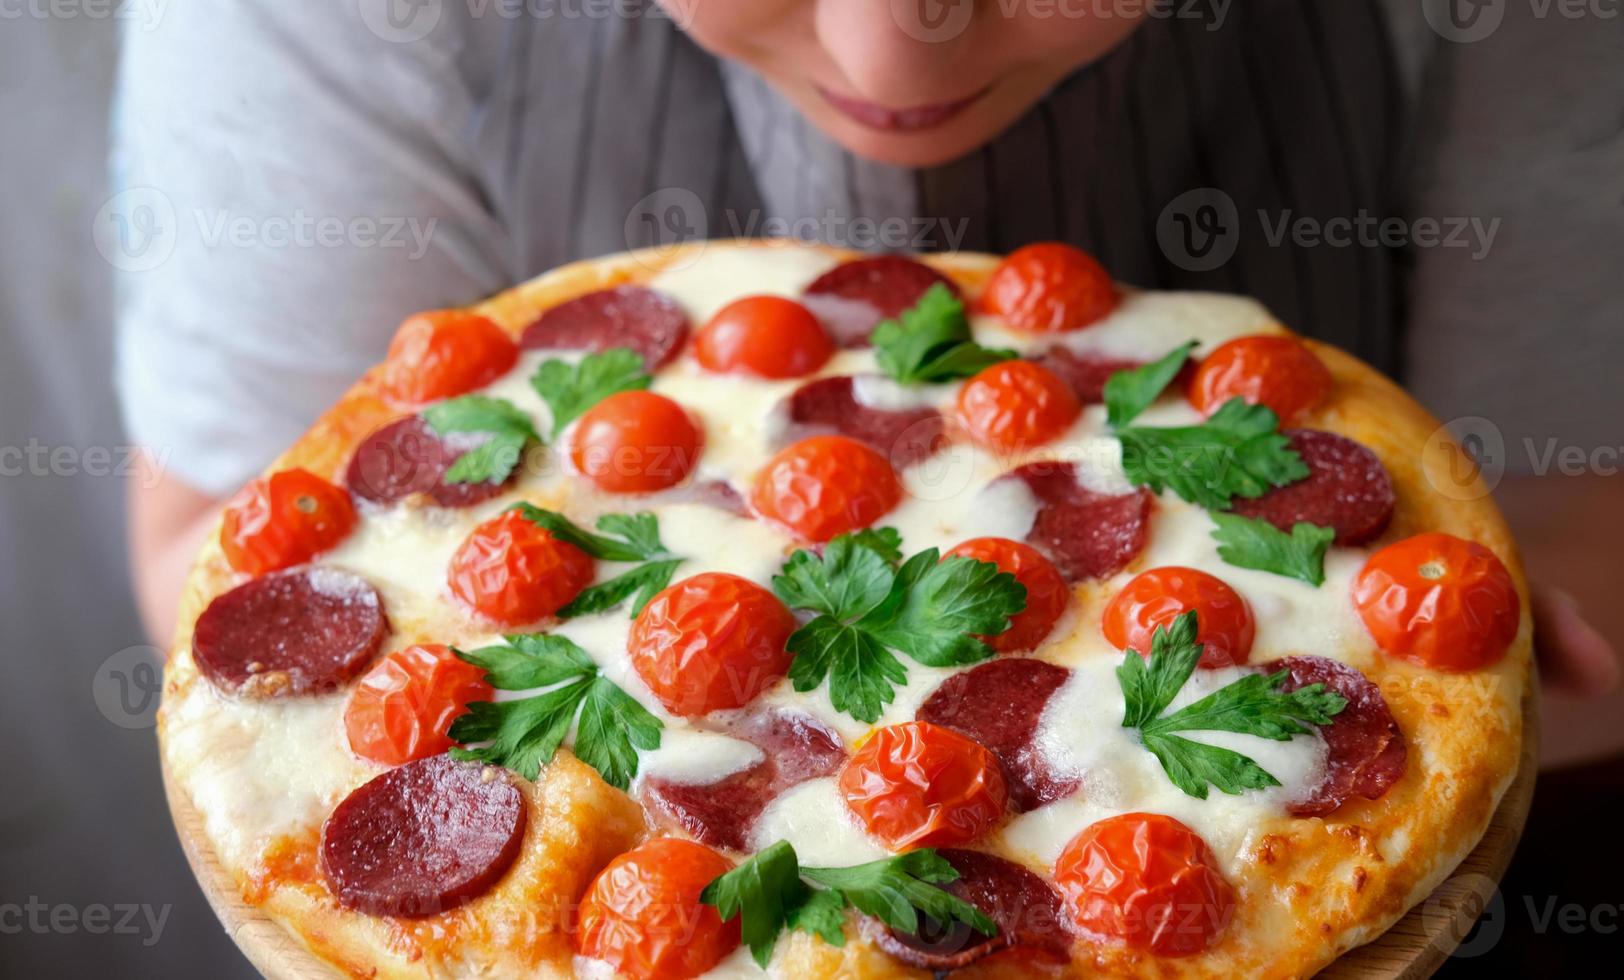 Italiaans pizzarestaurantmenu. pepperoni pizza met mozzarella kaas, salami, cherrytomaatjes en koriander. foto